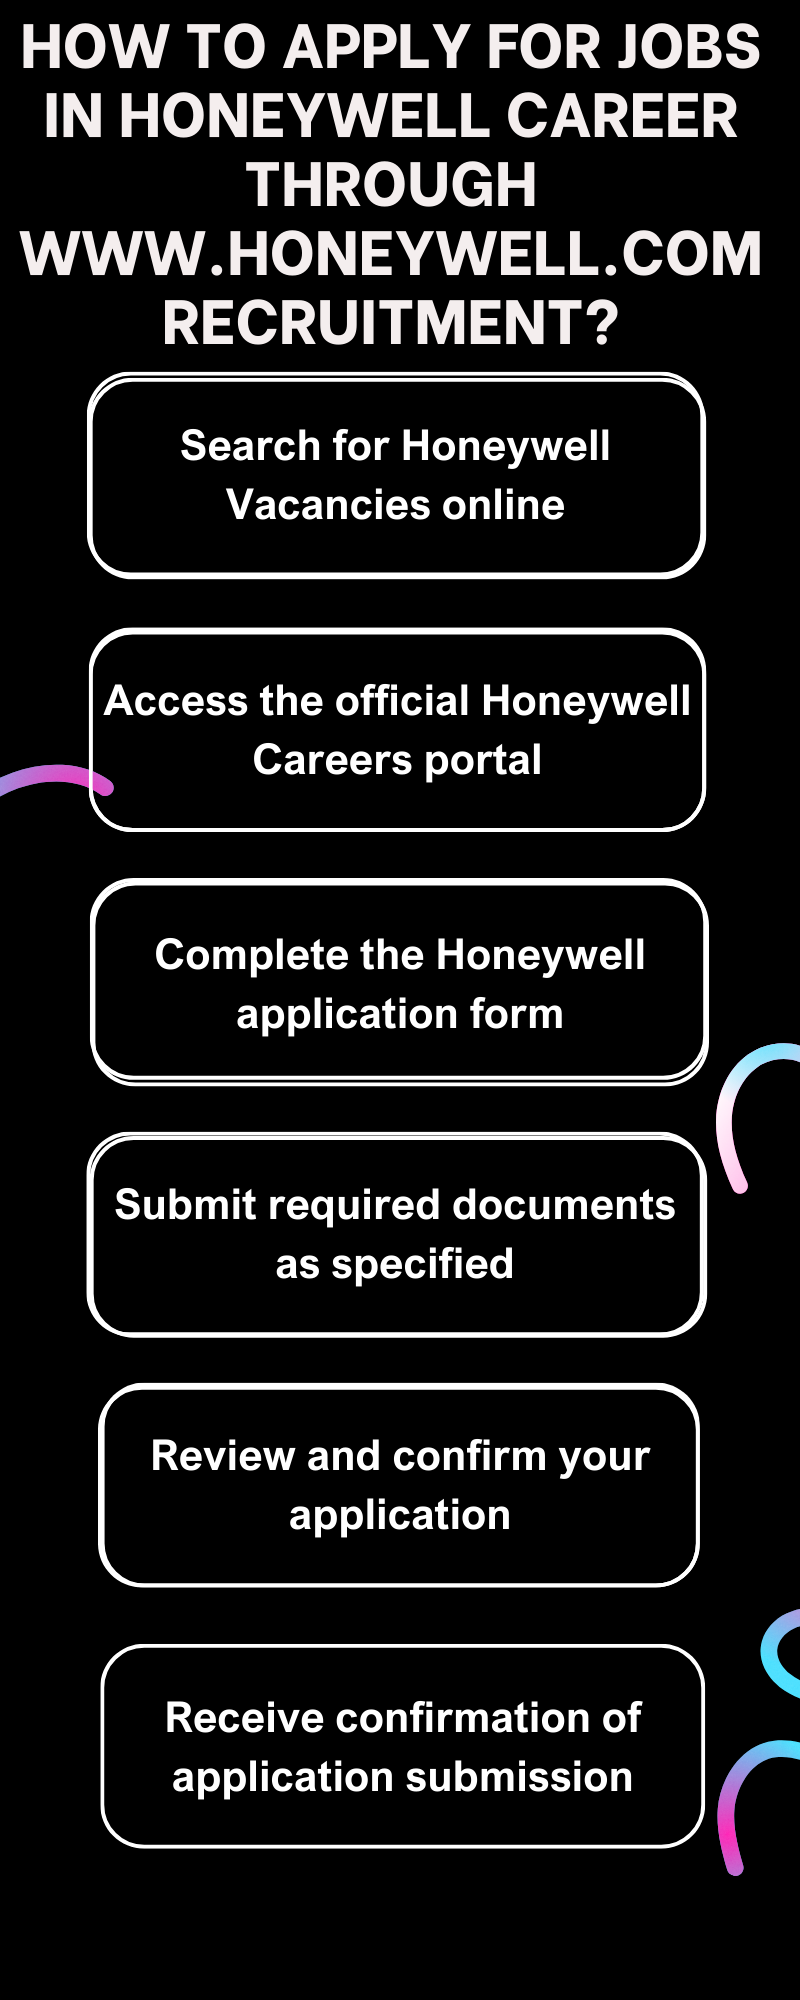 How to Apply for Jobs in Honeywell Career through www.honeywell.com recruitment?